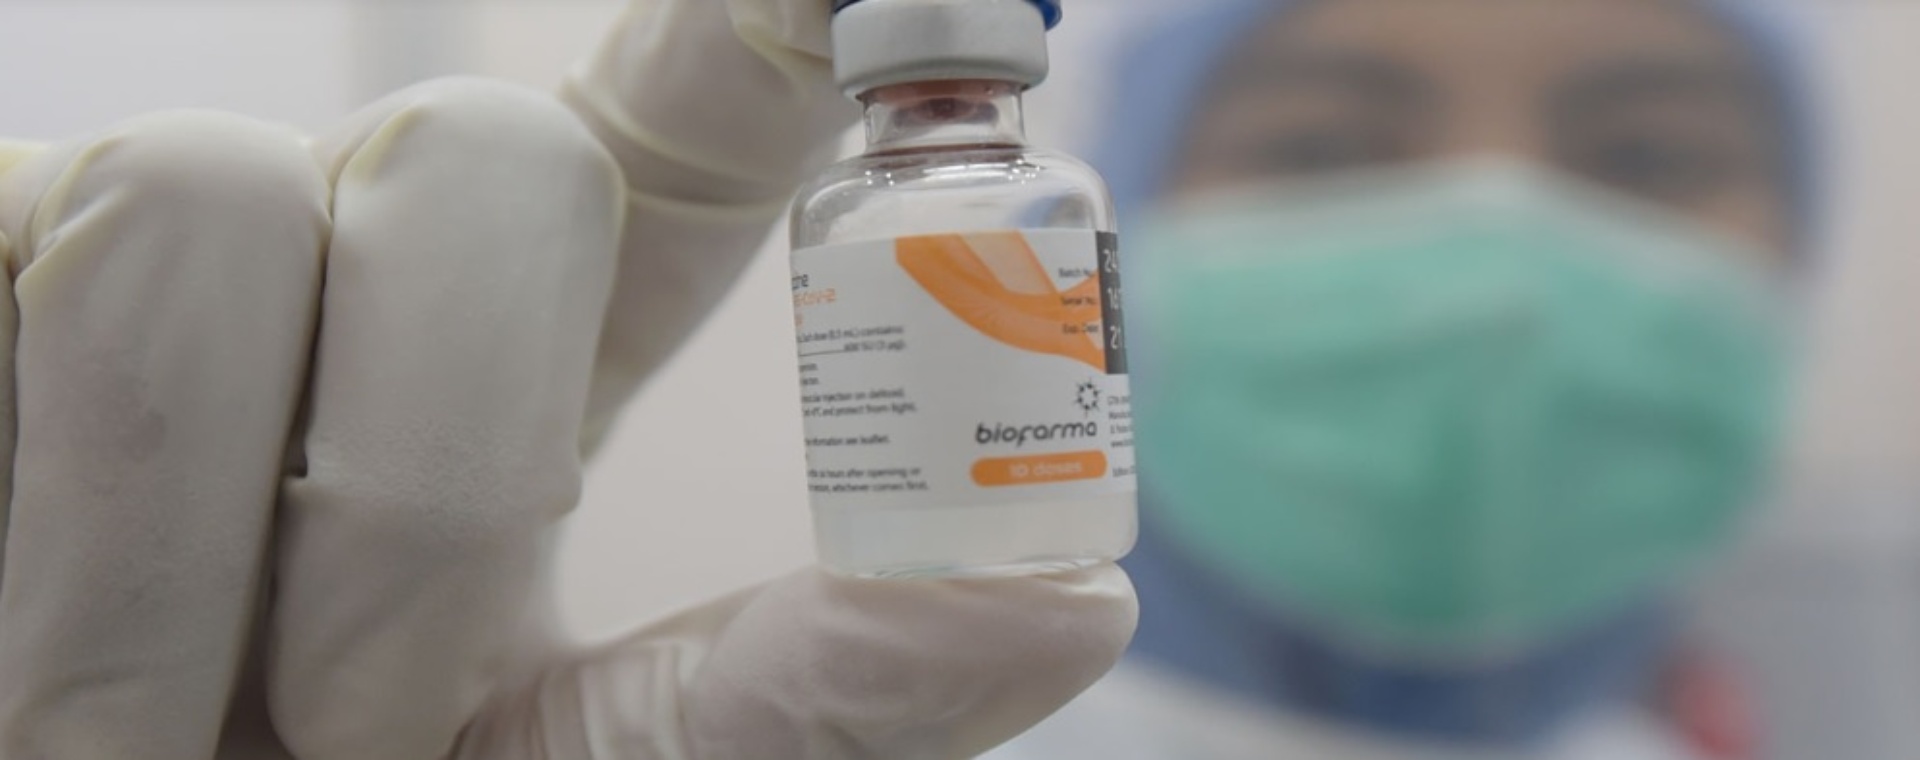  Cara, Syarat, dan Lokasi Gratis Vaksin Covid Terbaru